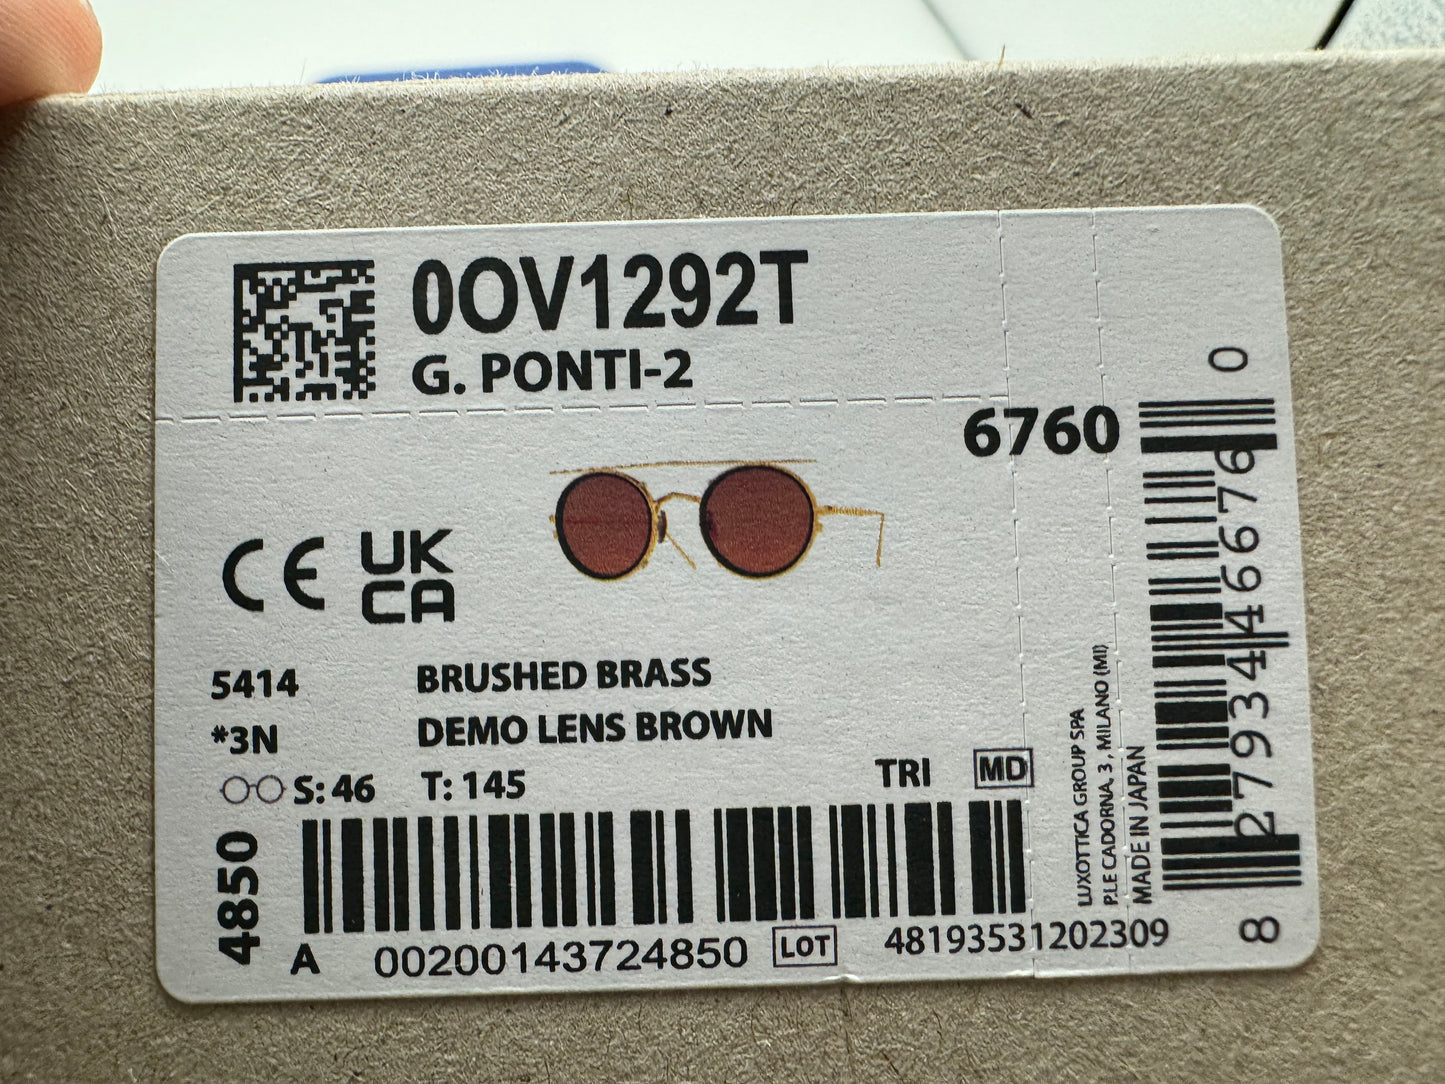 Oliver Peoples G. Ponti - 2 46mm OV 1292 T 5414 Brushed Brass / Brown Clip Japan